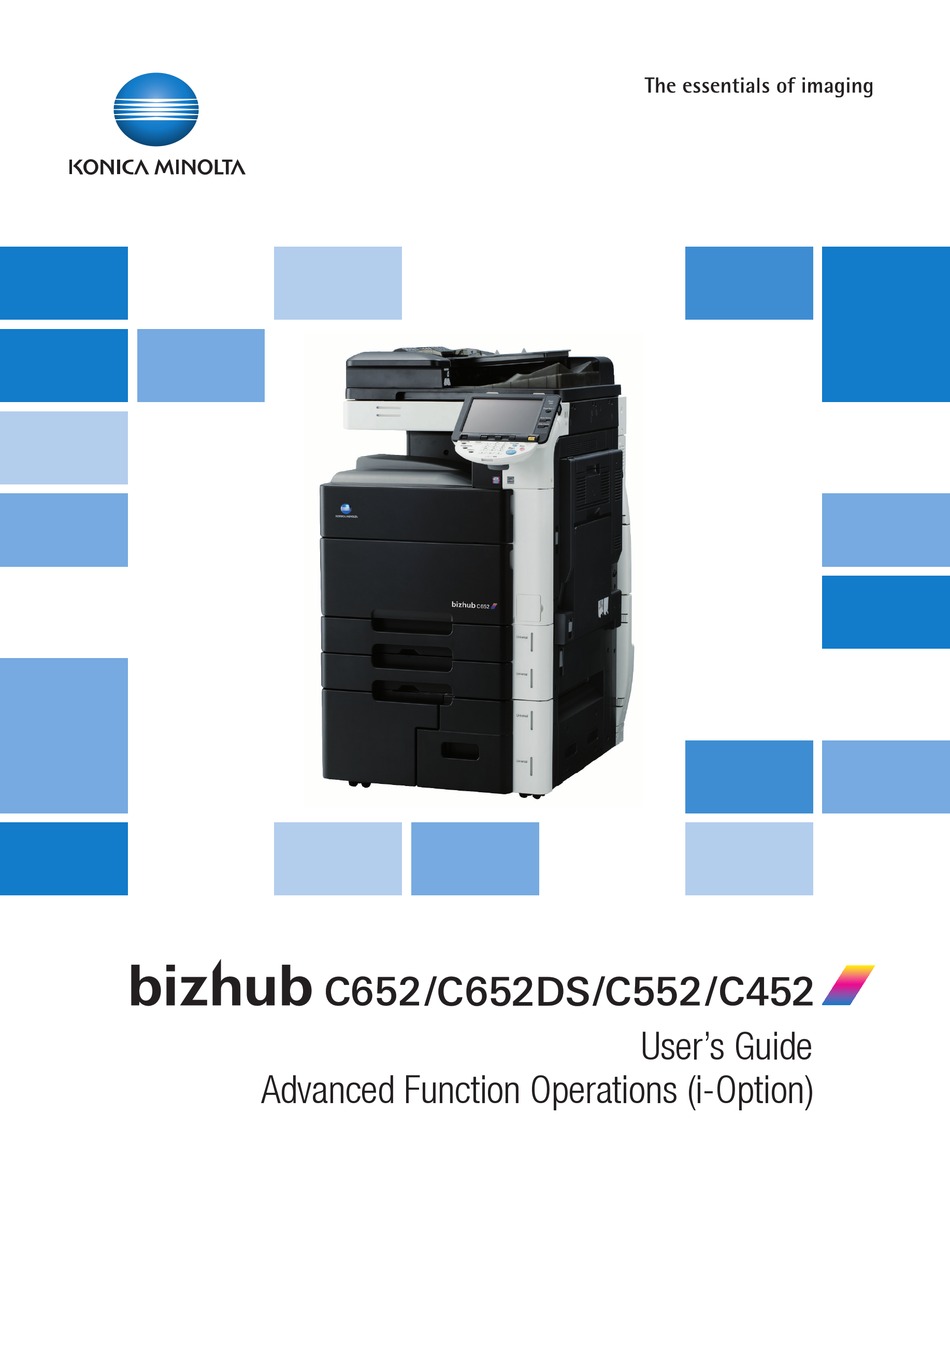 program a bizhub c652 imaging unit